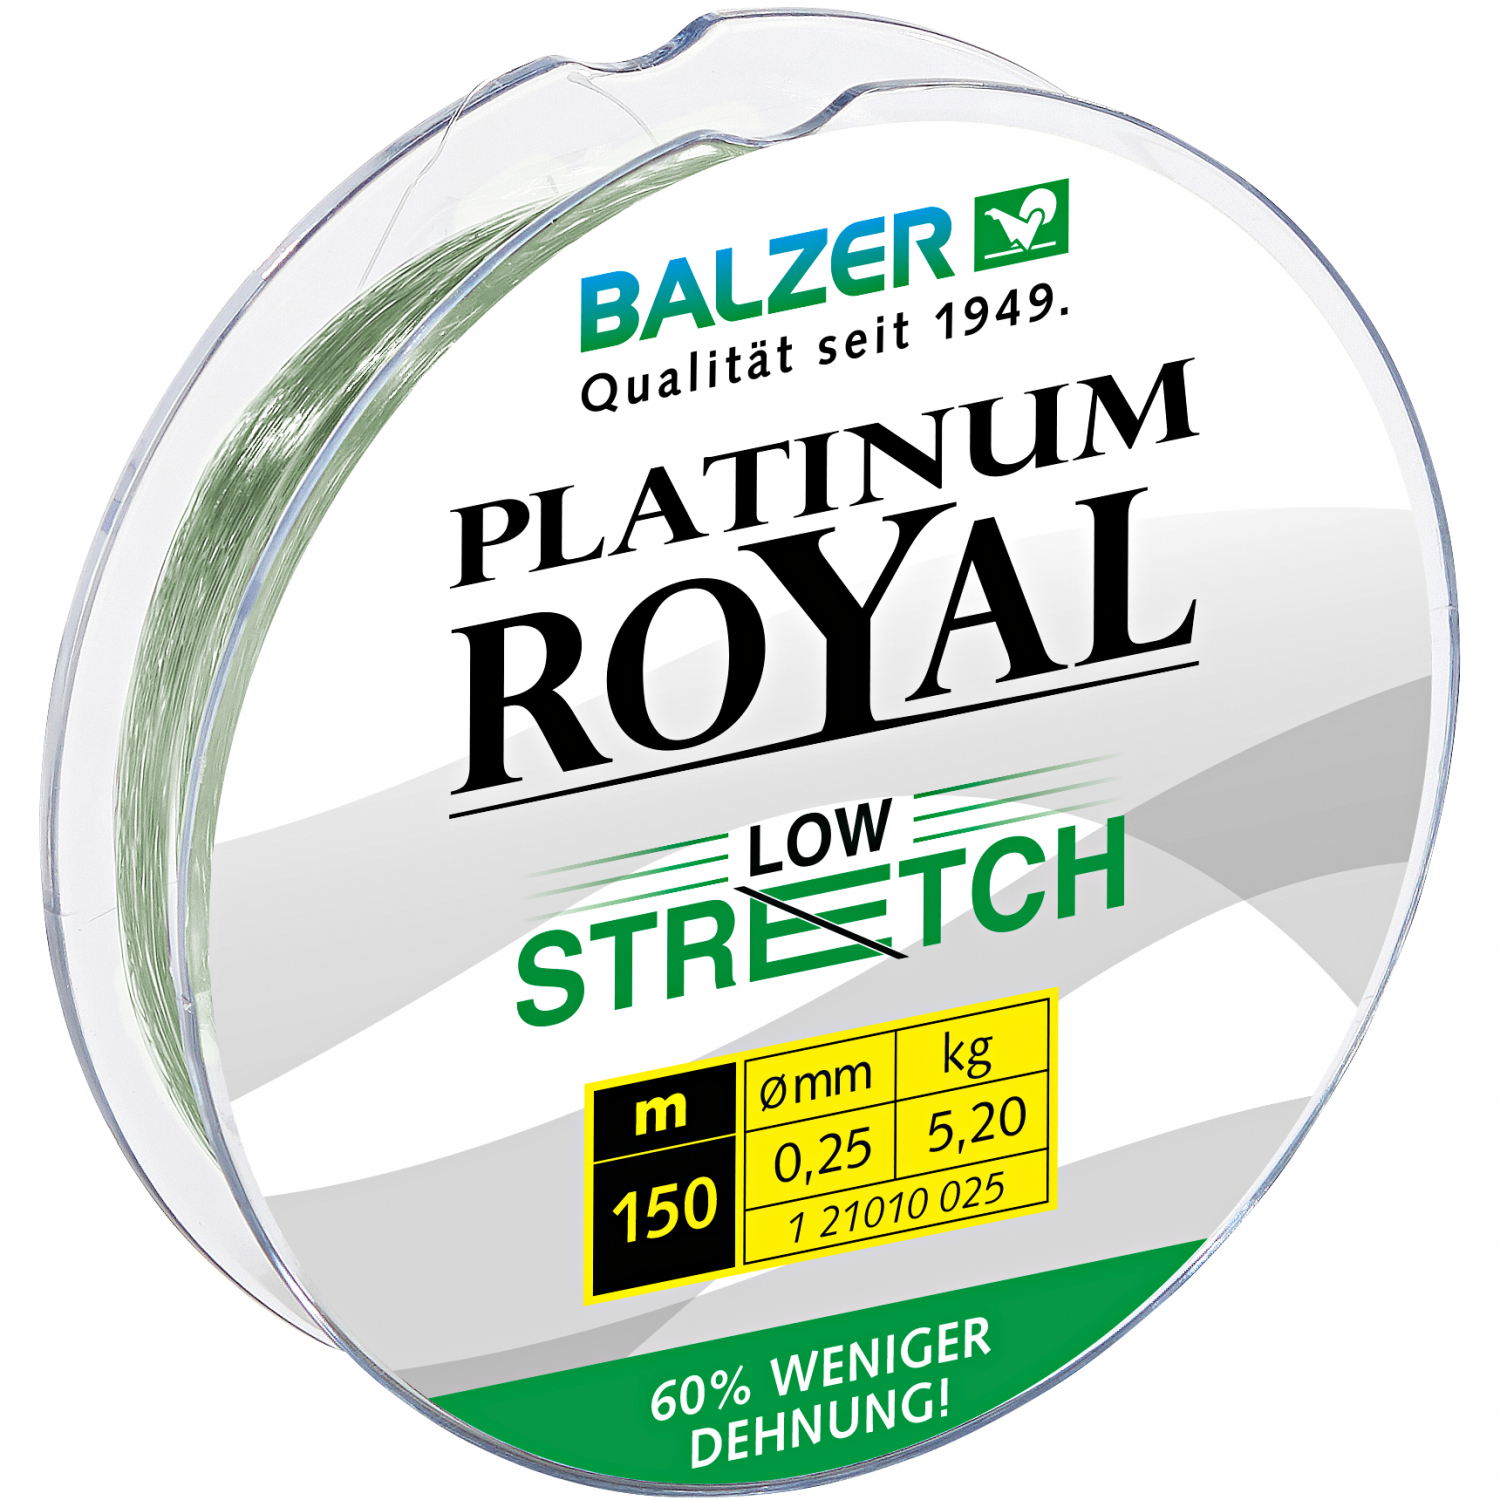 Balzer Platinum Royal Low at low prices